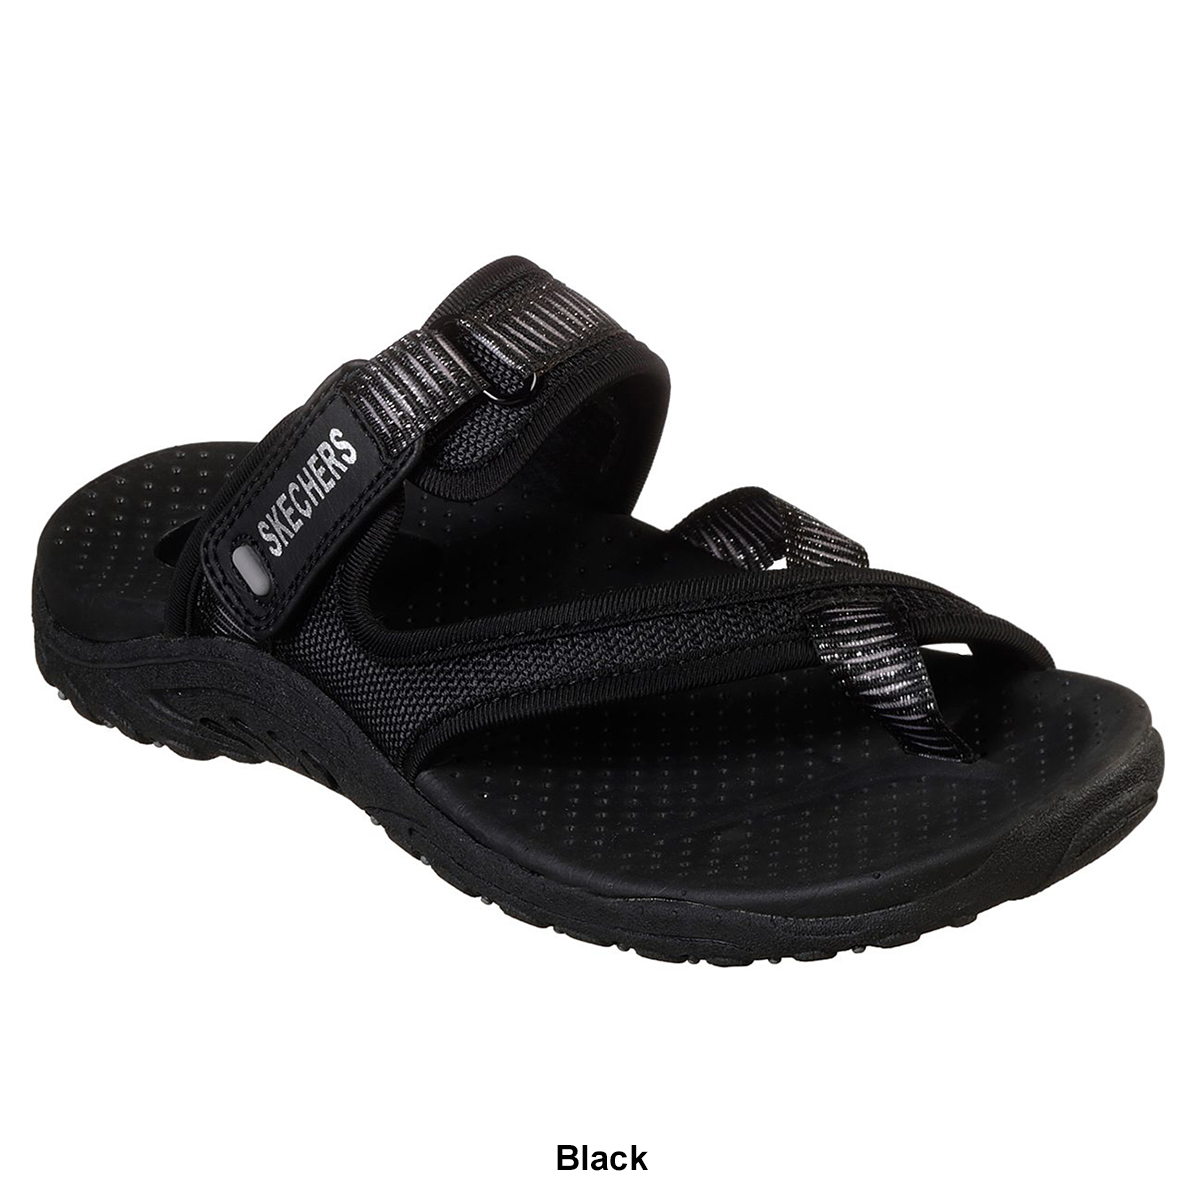 Reef Black Blue Rubber Nylon Slip On Thong Flip Flop Sandals Boat Men's Shoes 9M 